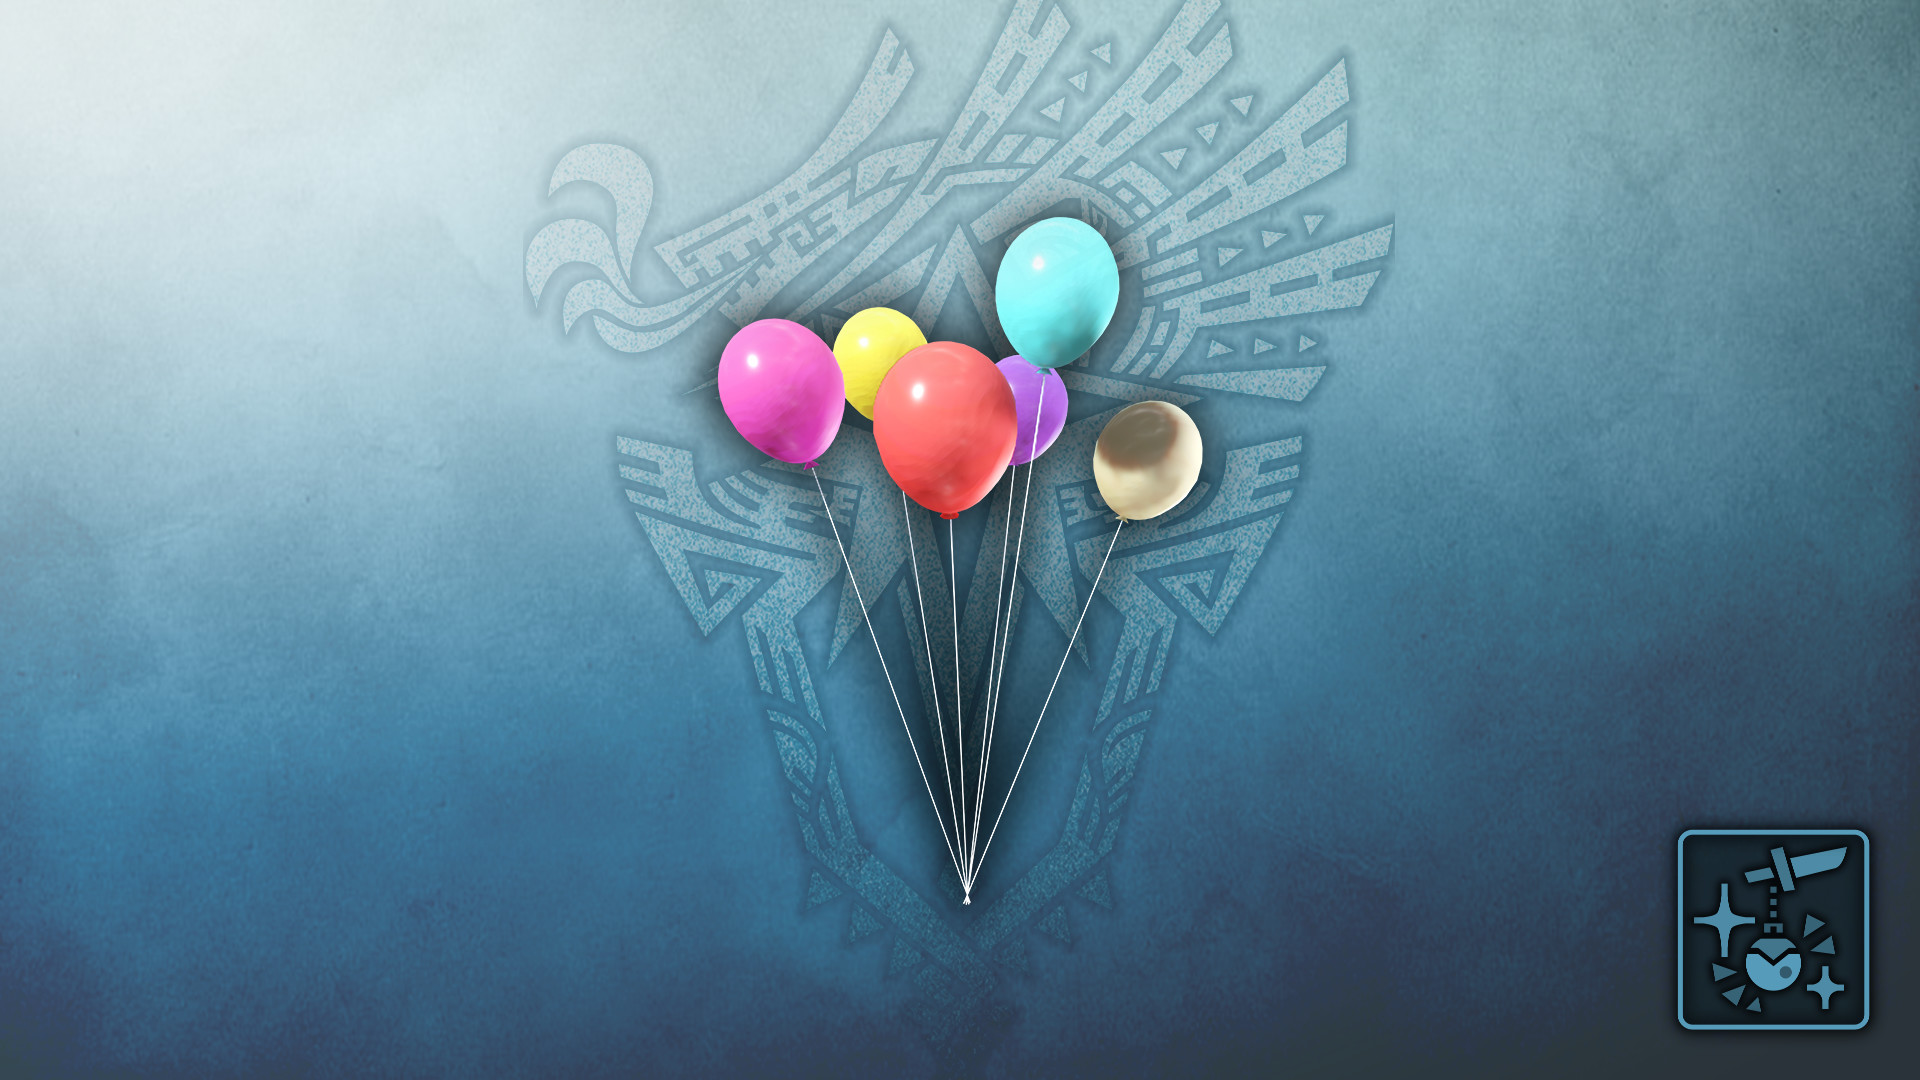 Monster Hunter World: Iceborne - Pendant: Rainbow Balloons Featured Screenshot #1